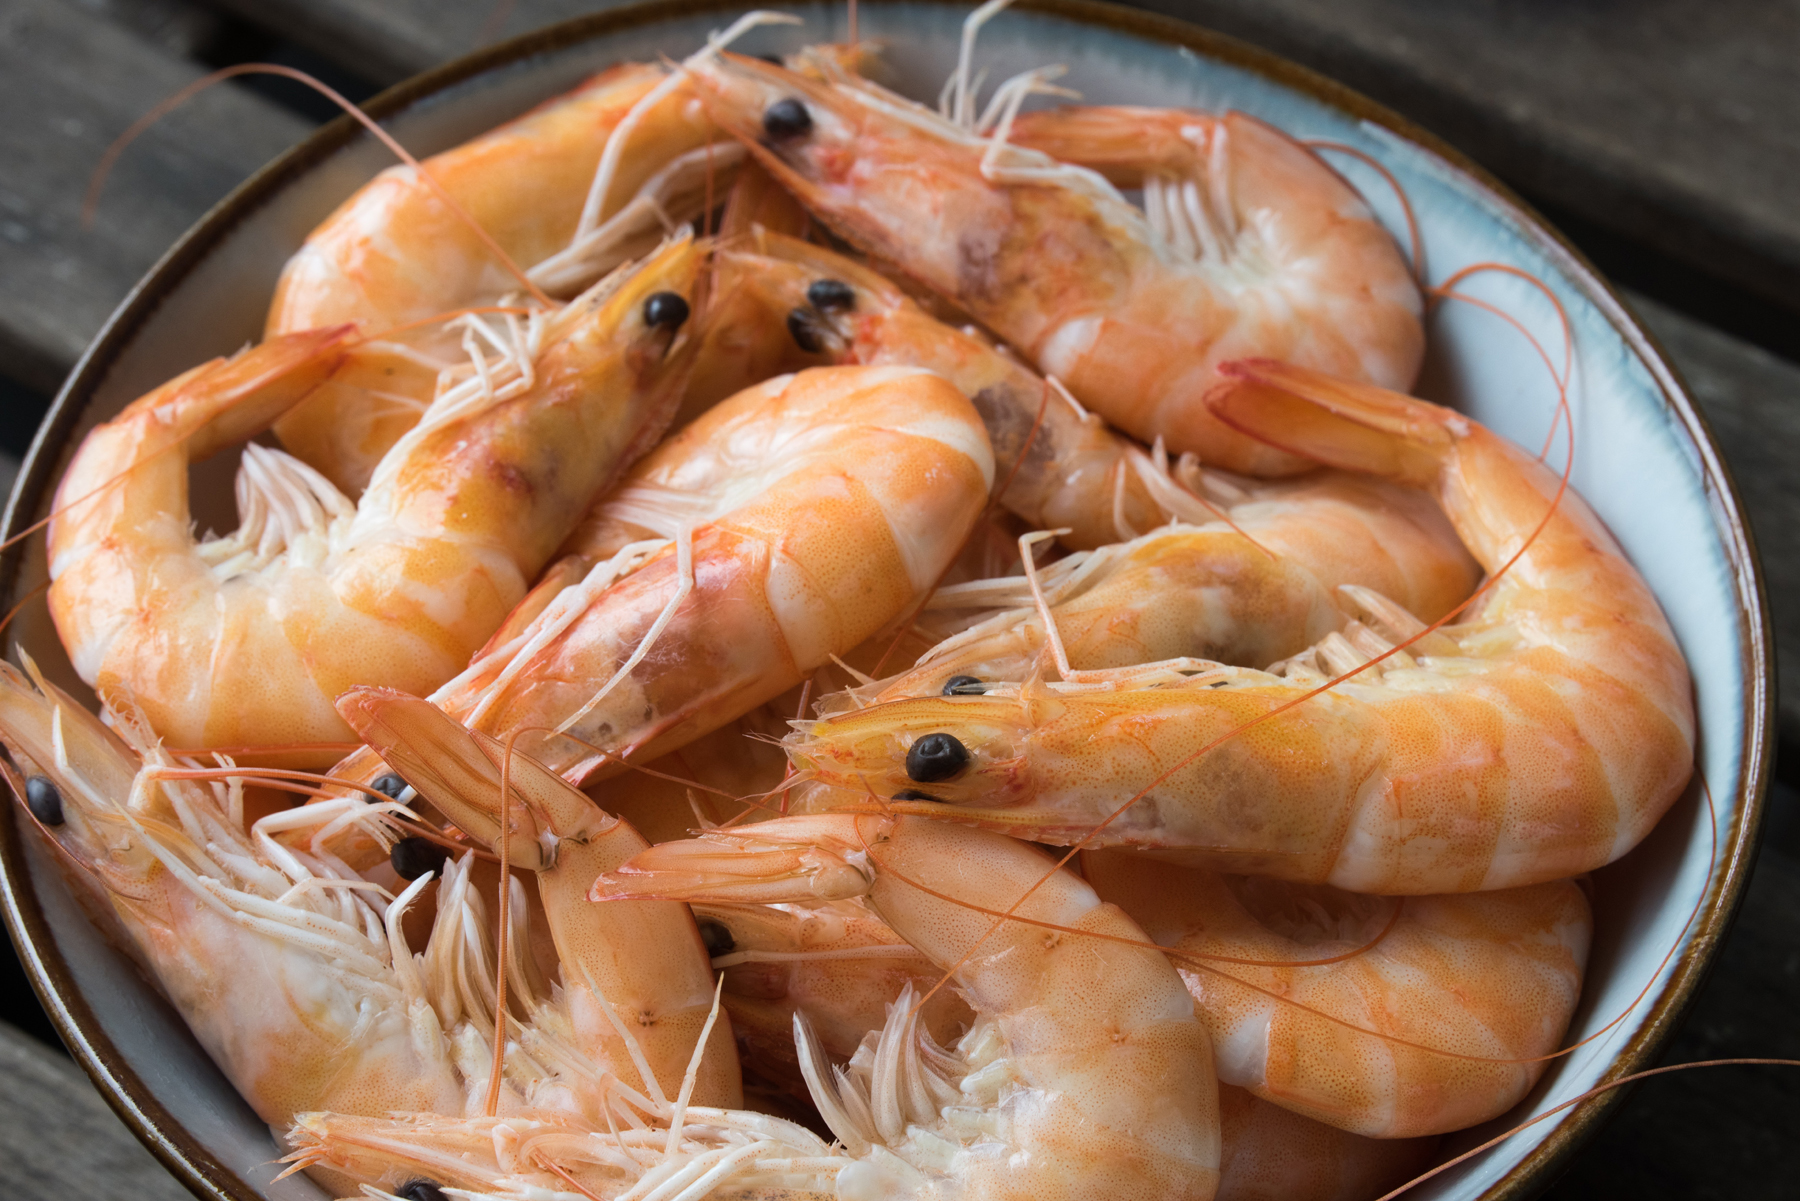 Shrimp prawns in a bowl (source: Daniel Klein, Unsplash)